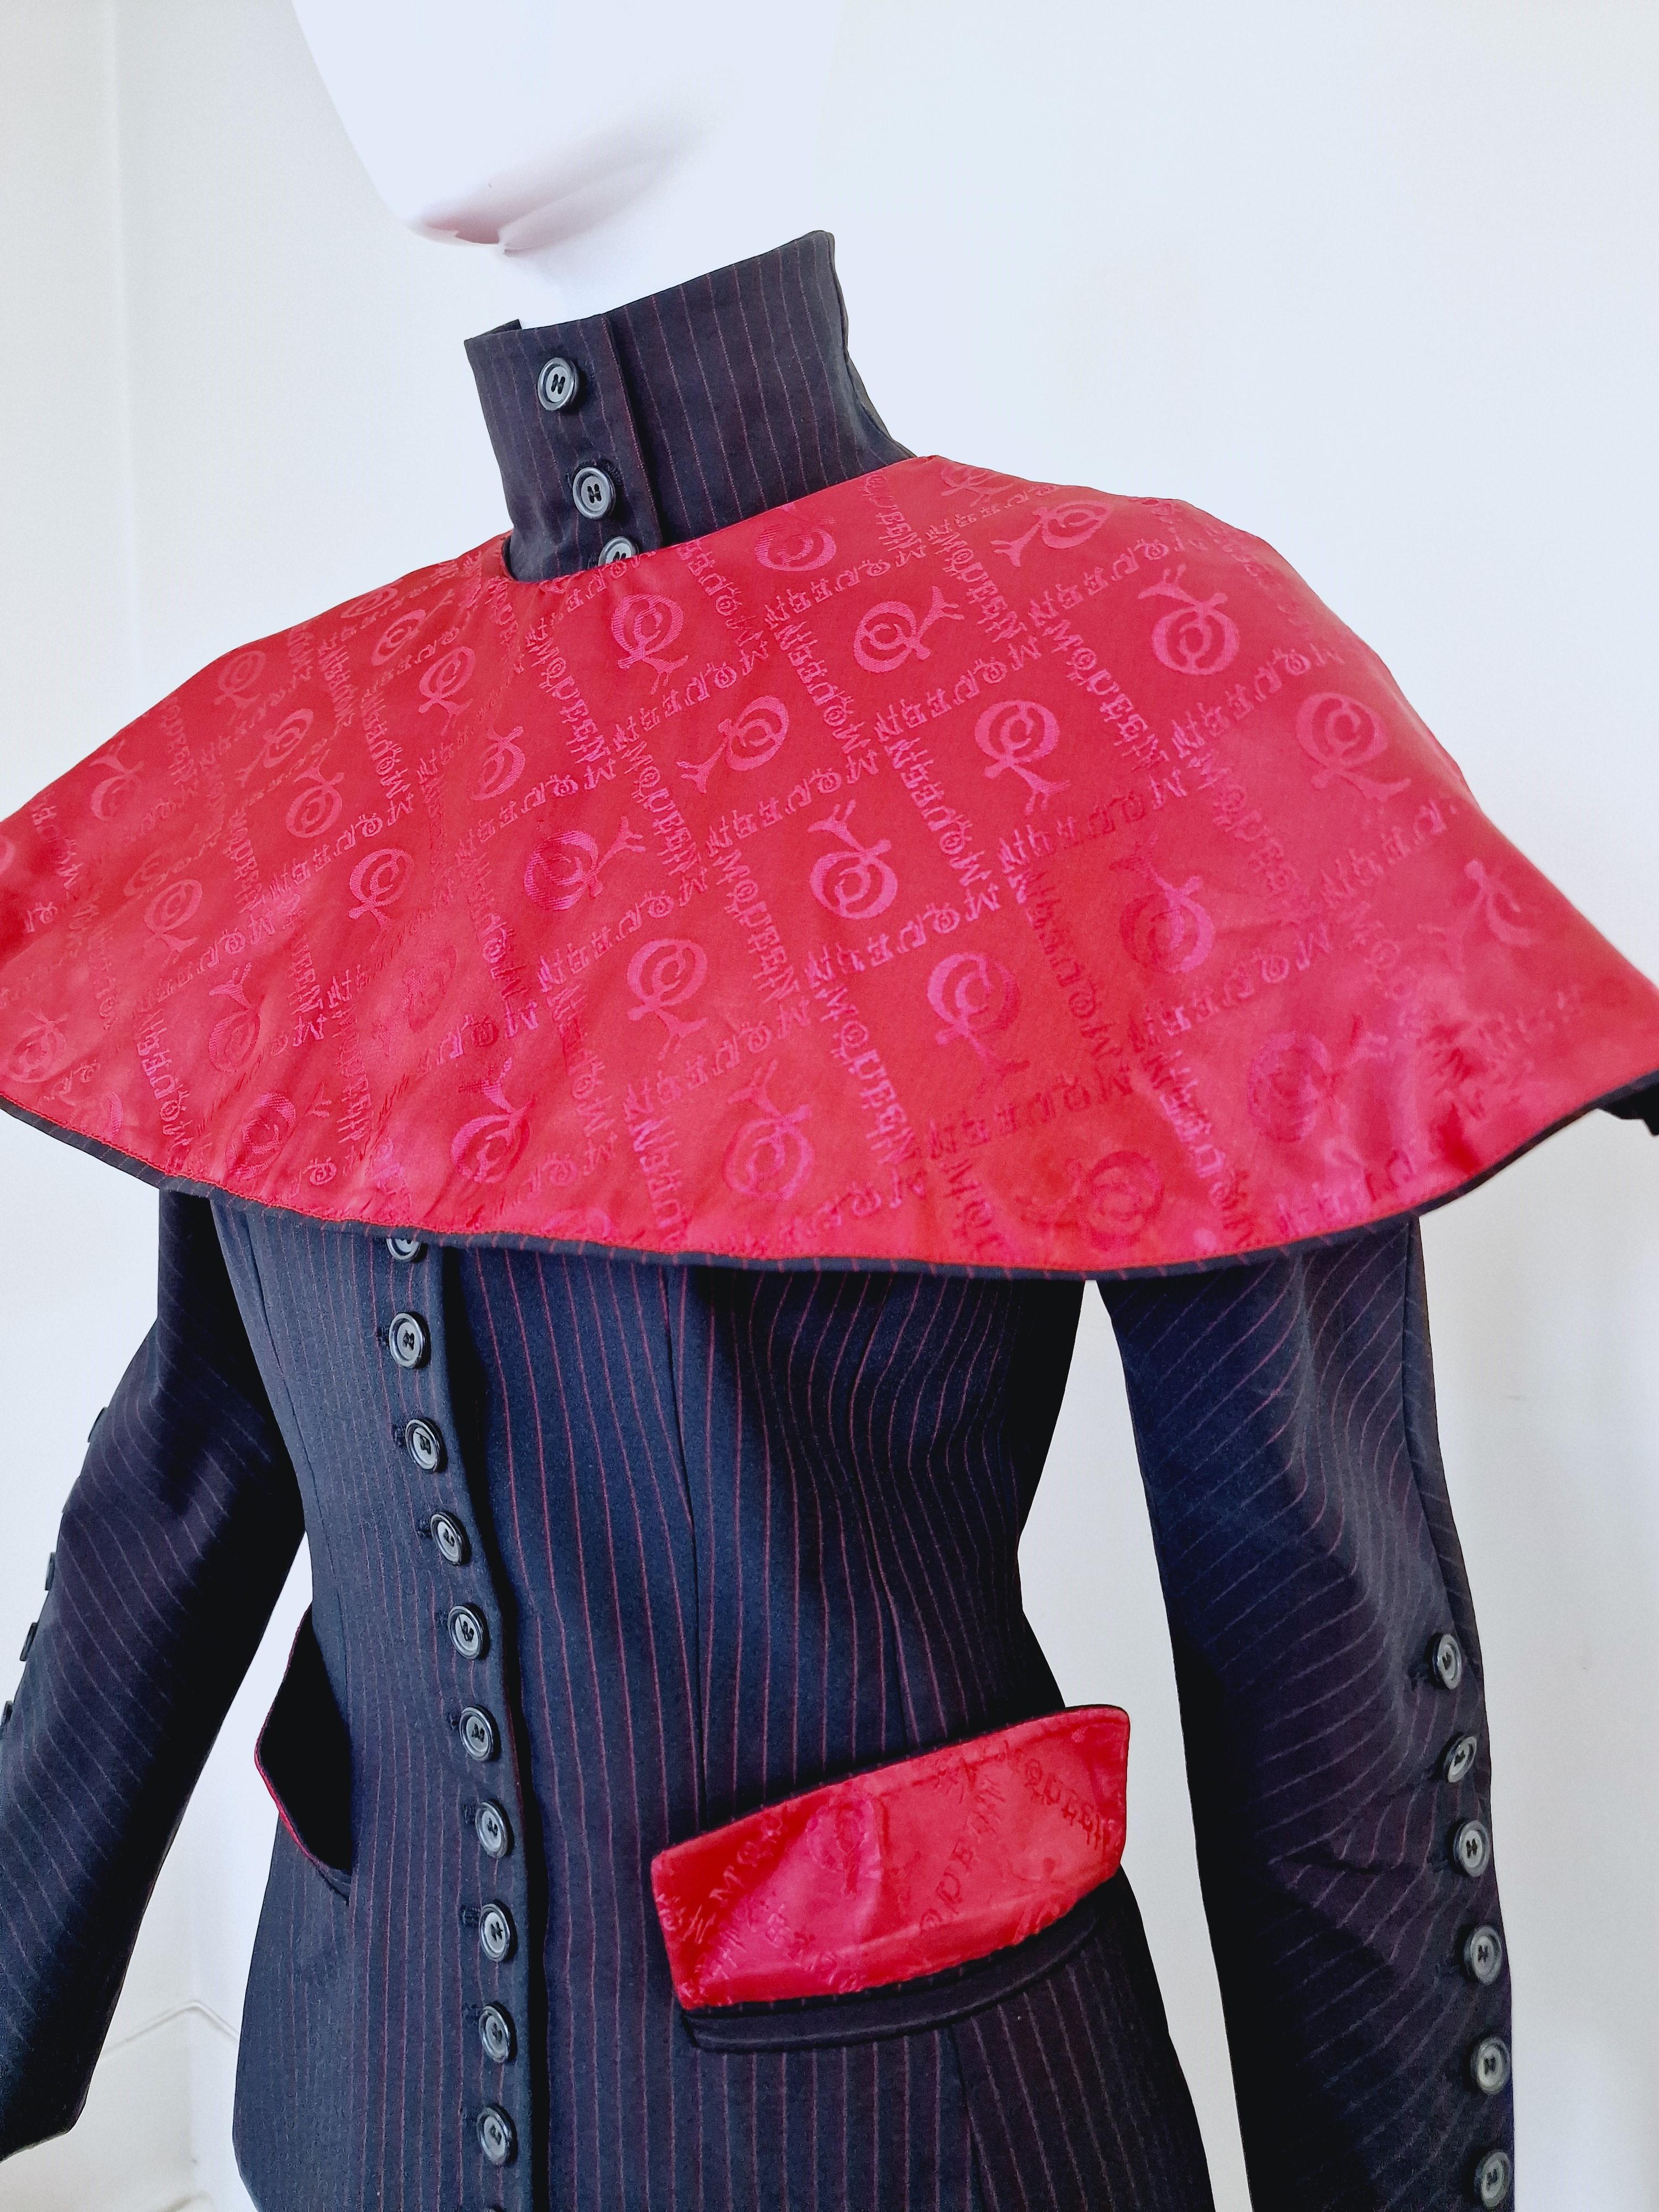 Early Alexander McQueen Joan of Arc Cape 1998 AW98 Runway Collar Dress Suit  en vente 4